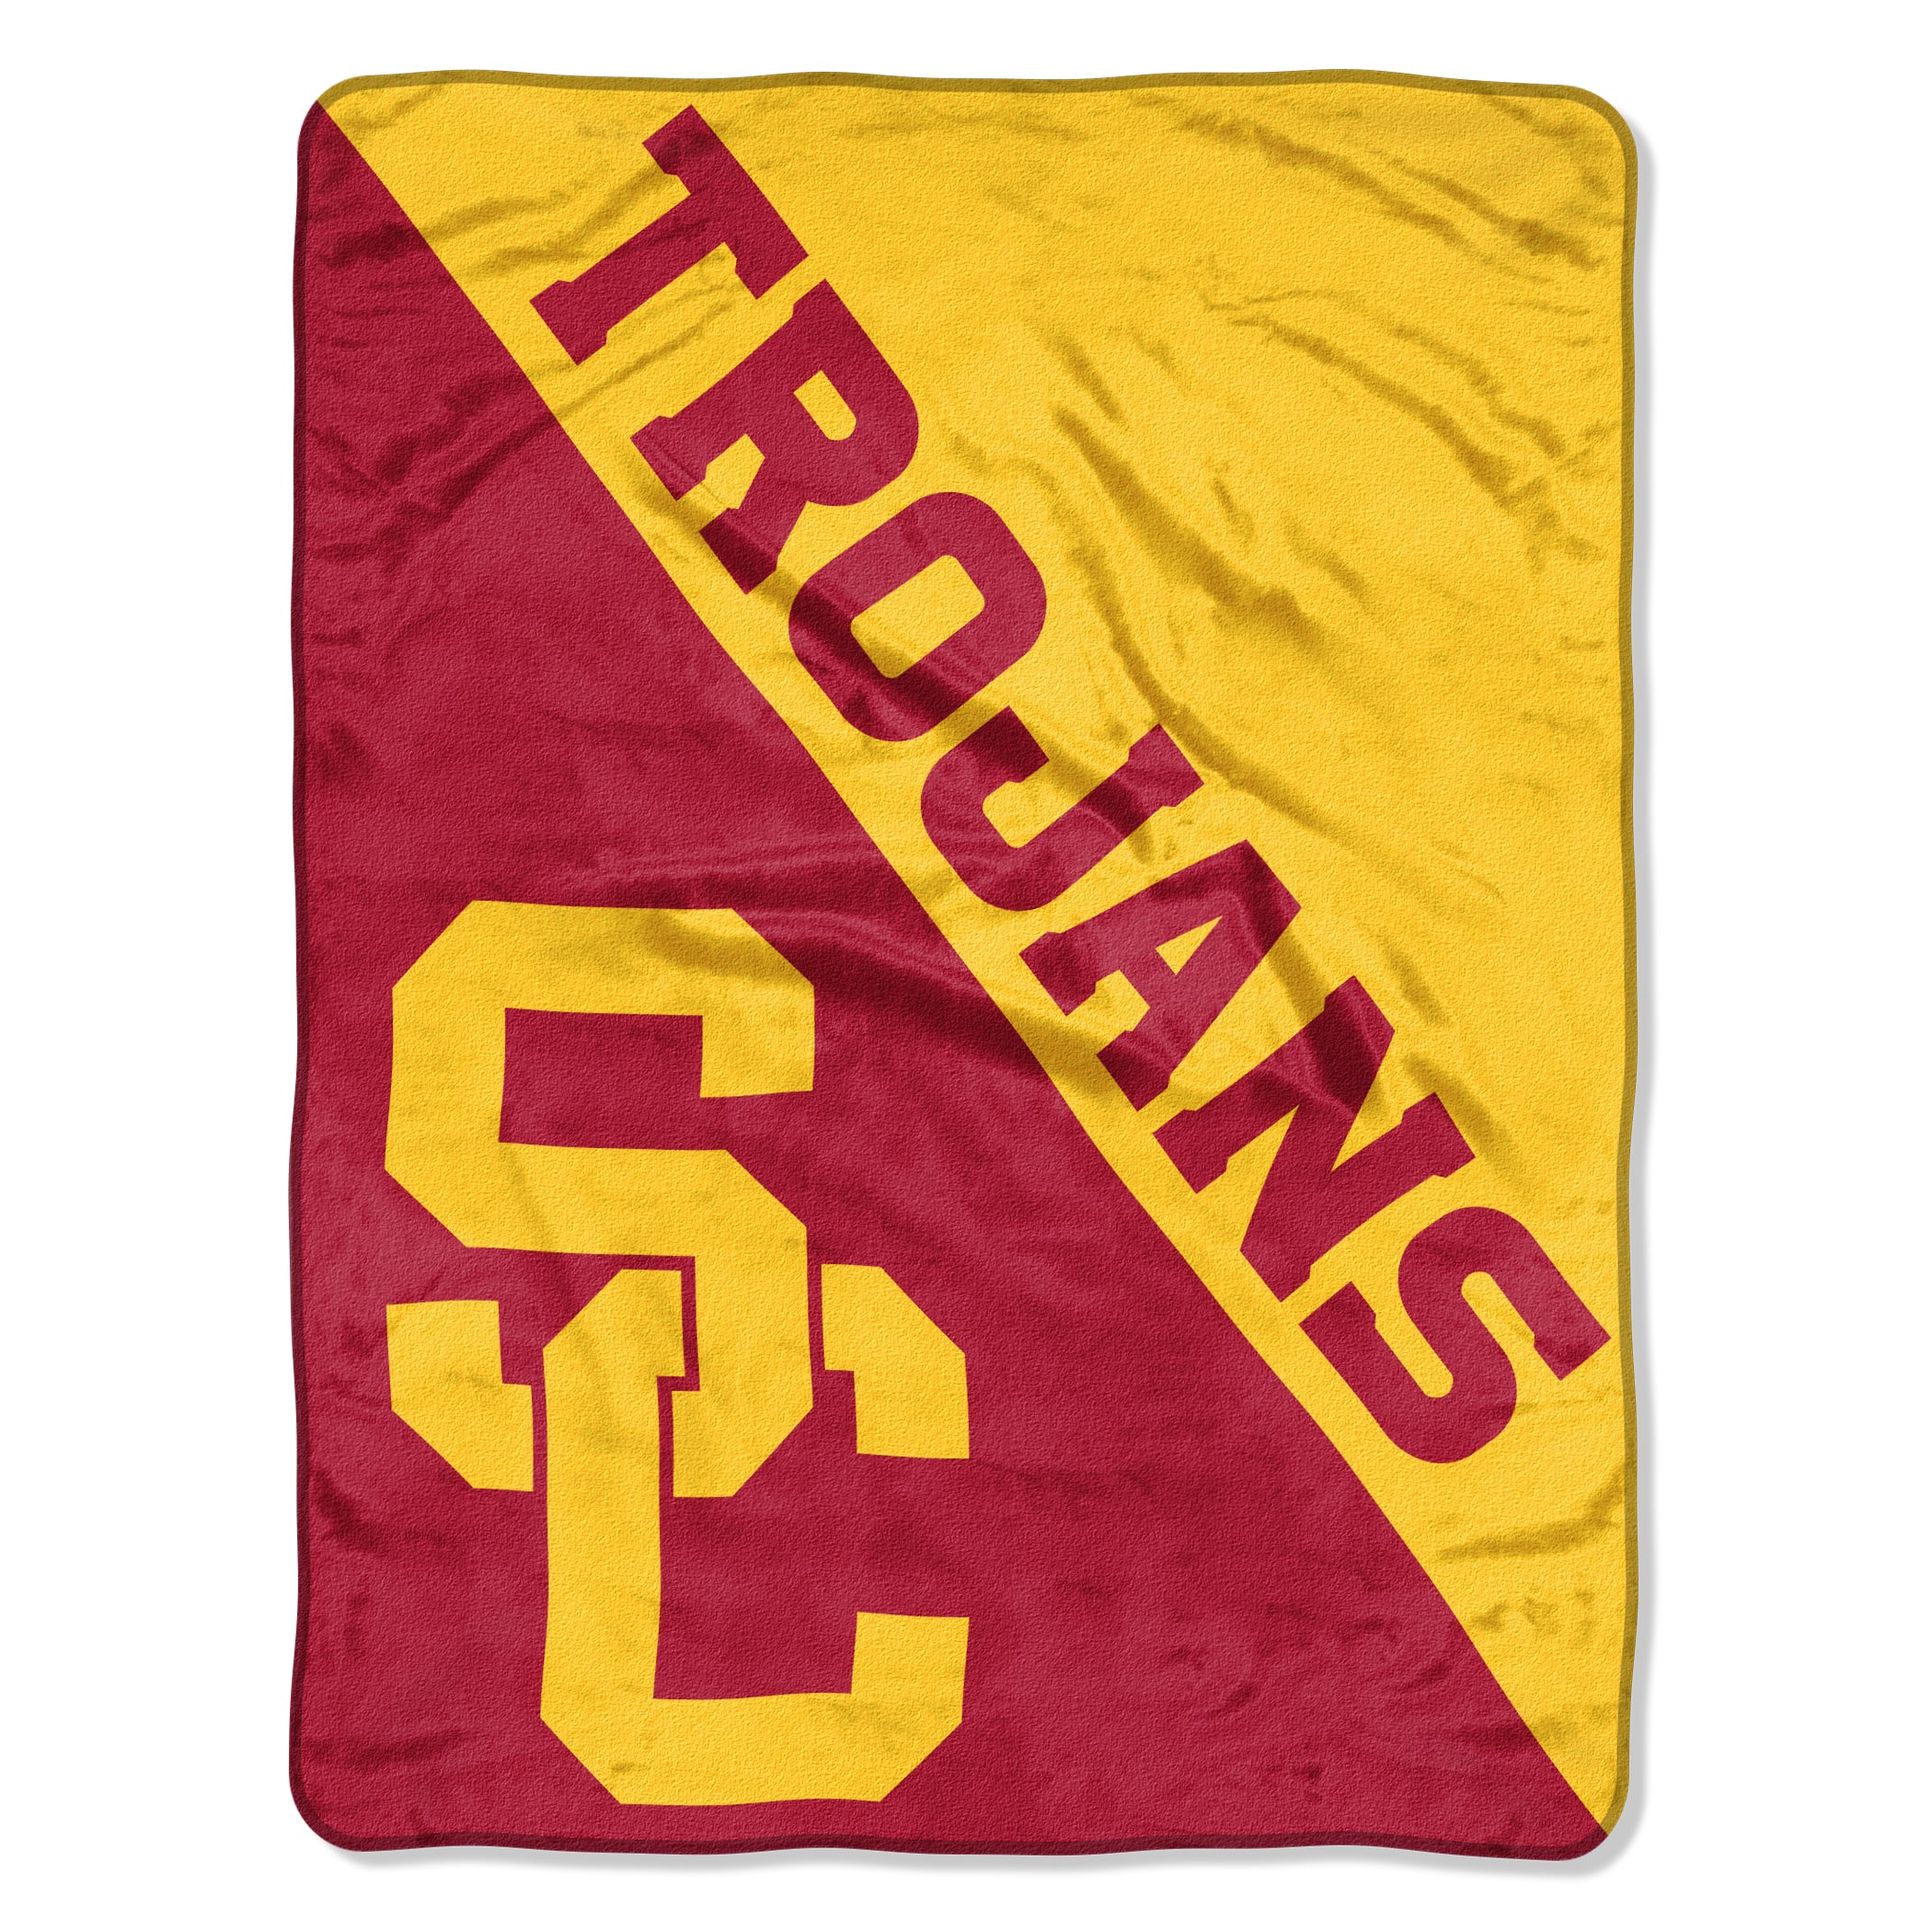 USC Trojans Blanket 46x60 Micro Raschel Halftone Design Rolled - Special Order